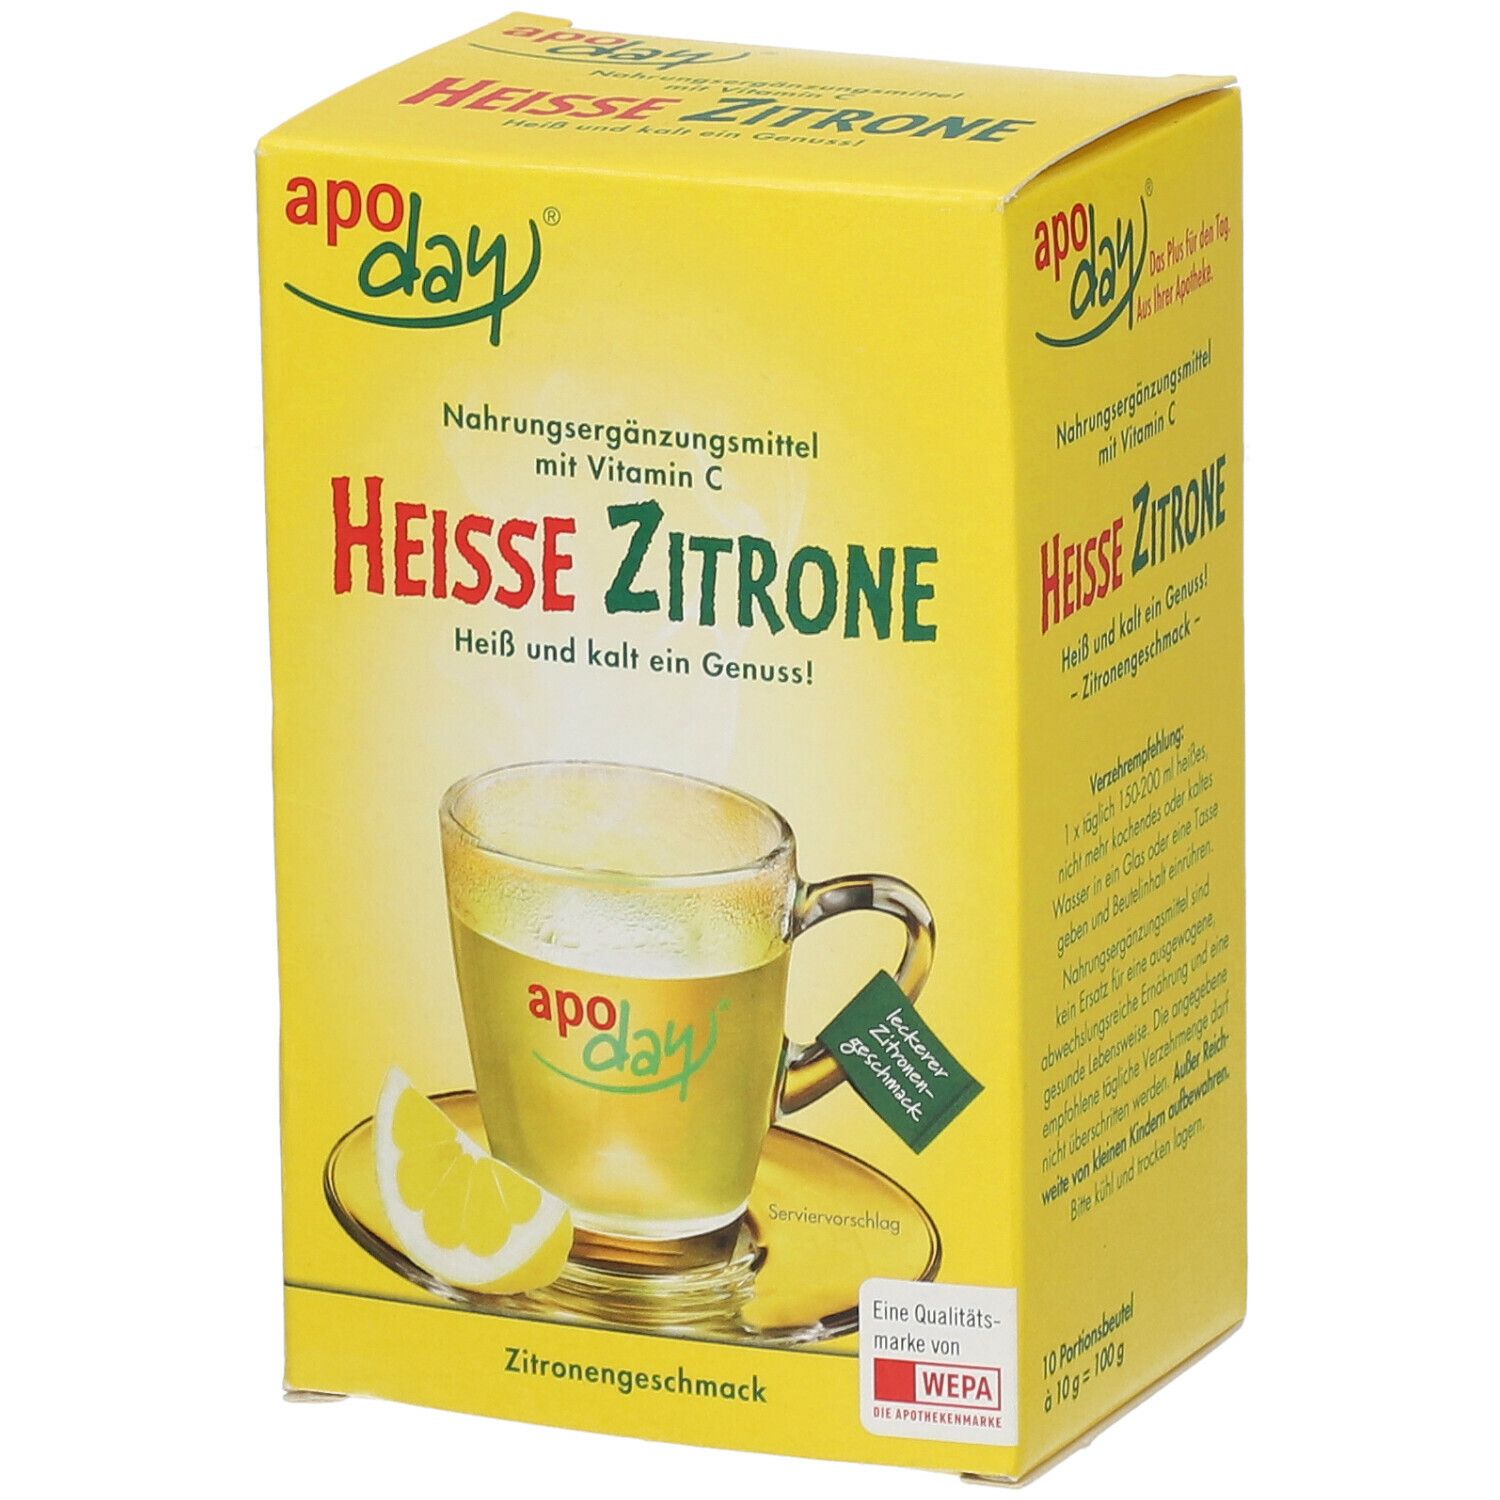 apoday® Heisse Zitrone Vitamin C Pulver